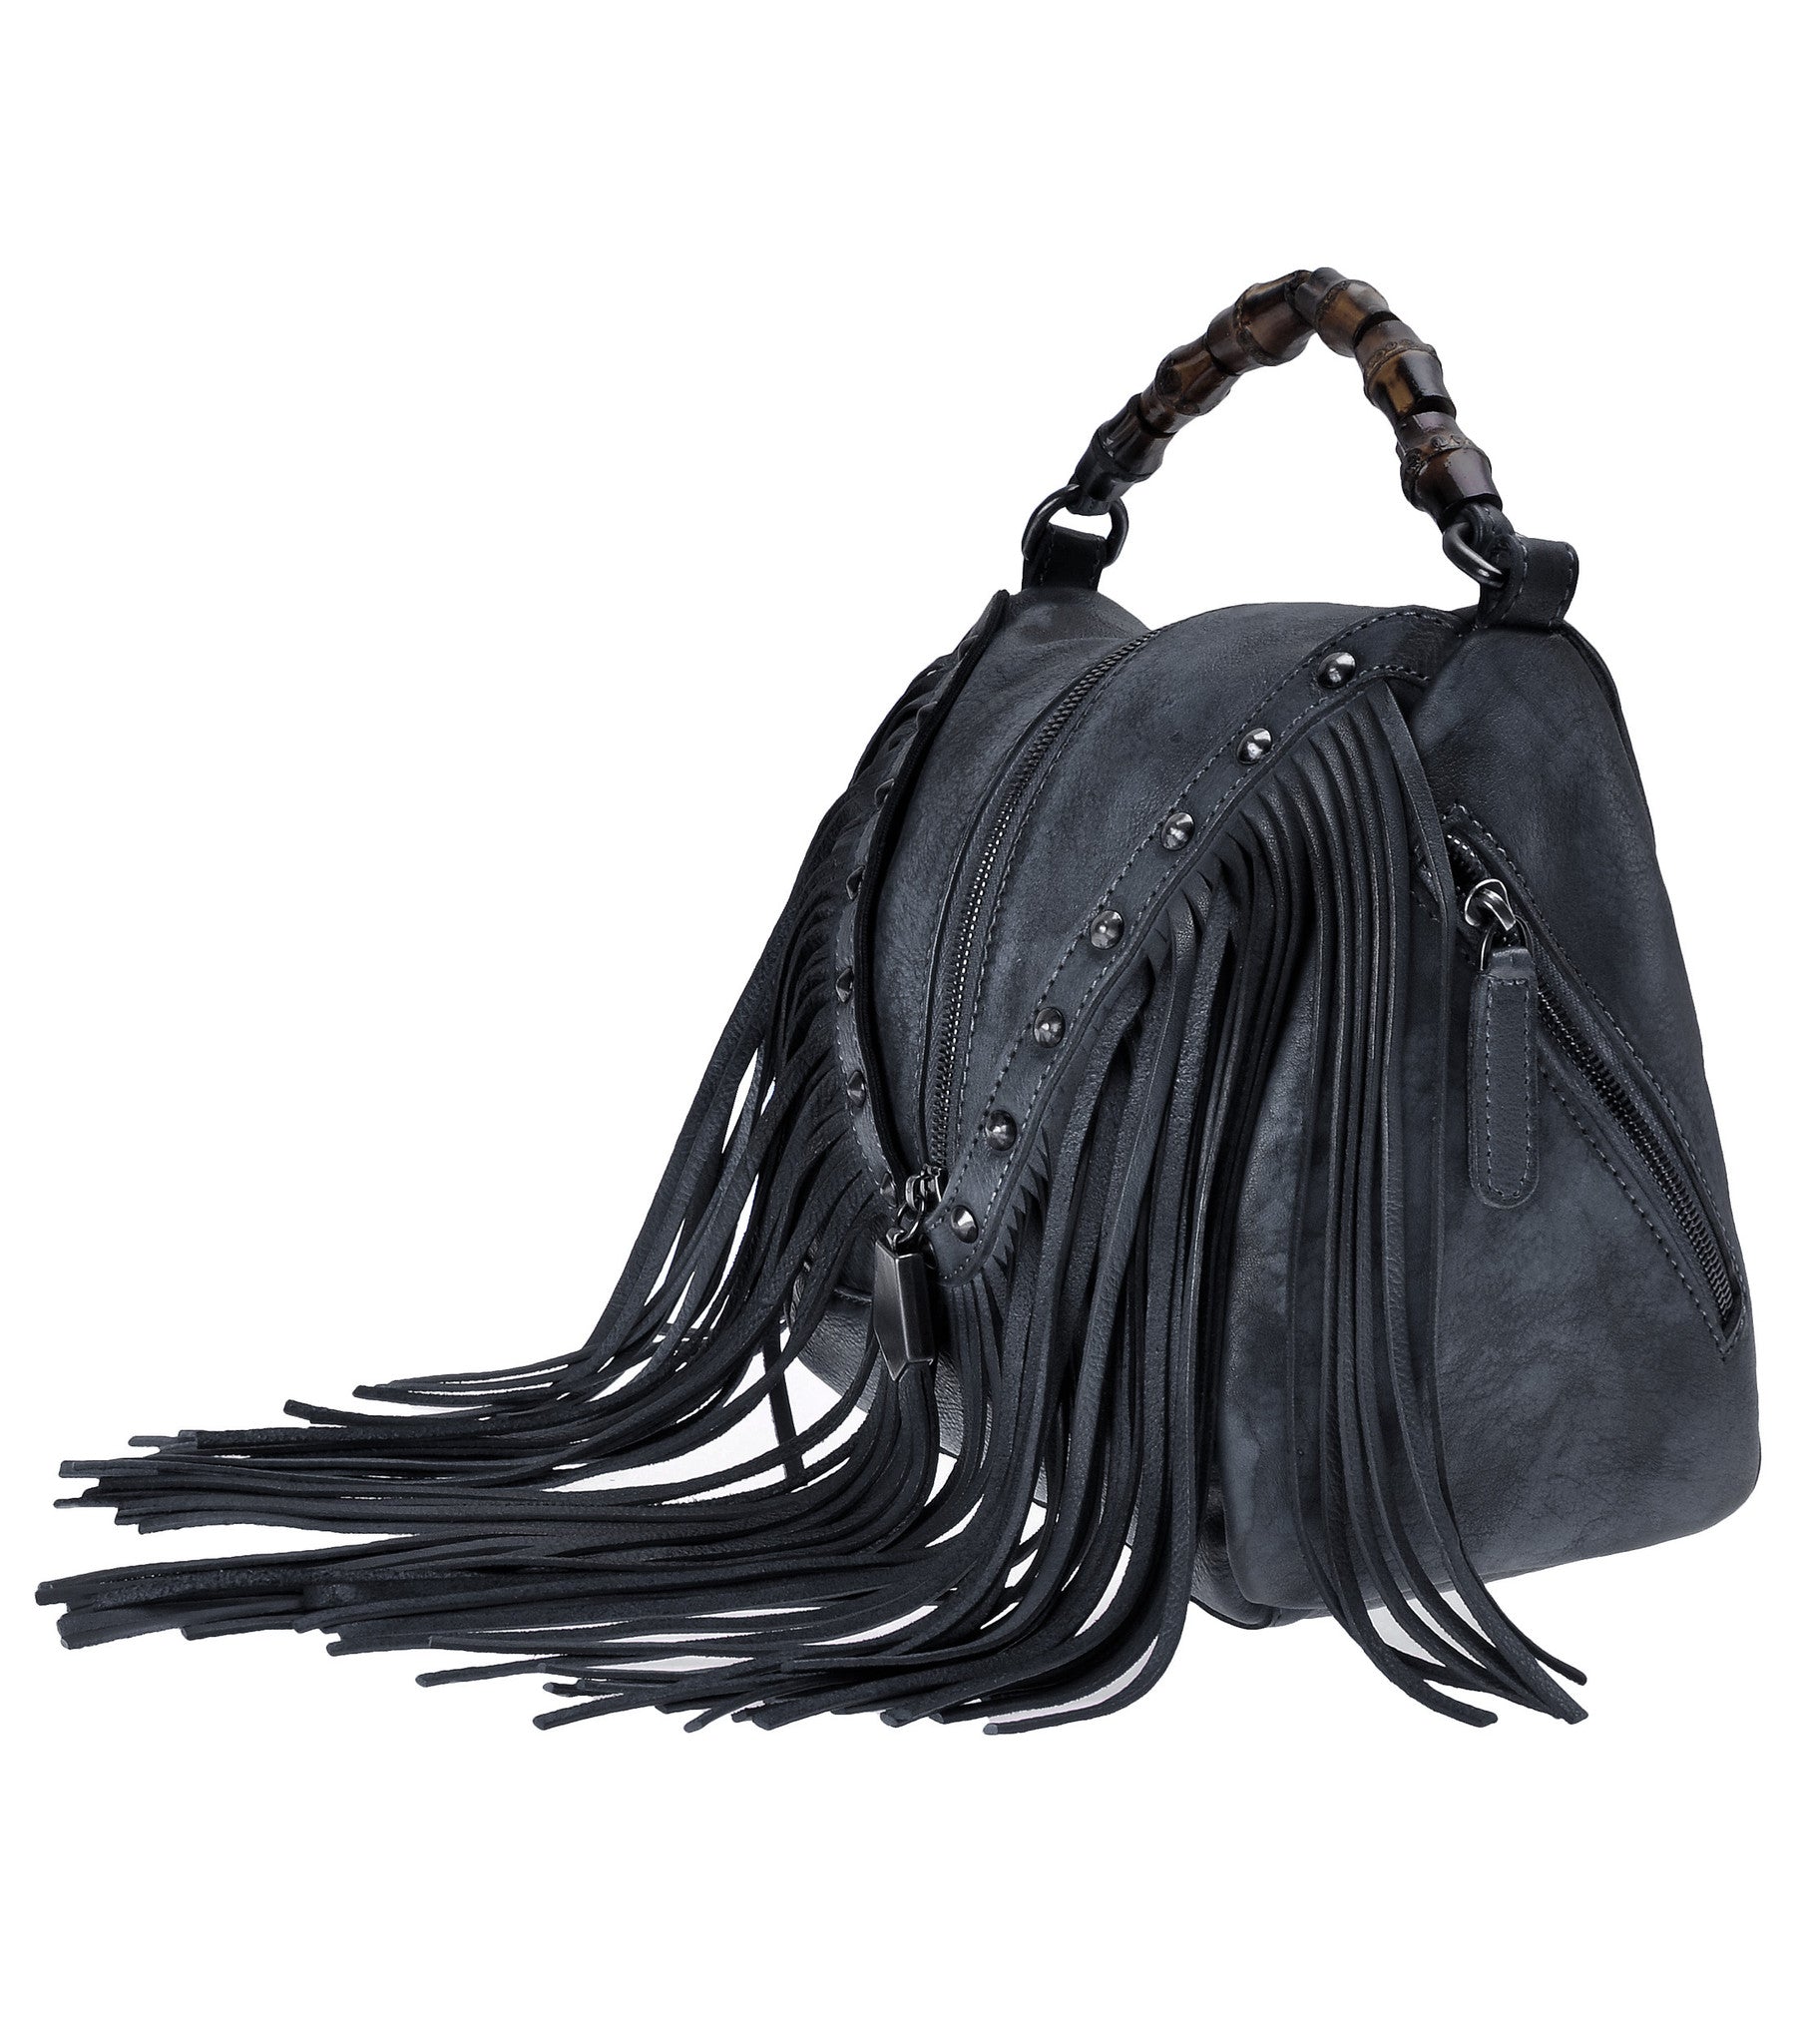 ZLYC Women's Handmade Dip Dye Leather Bucket Bag